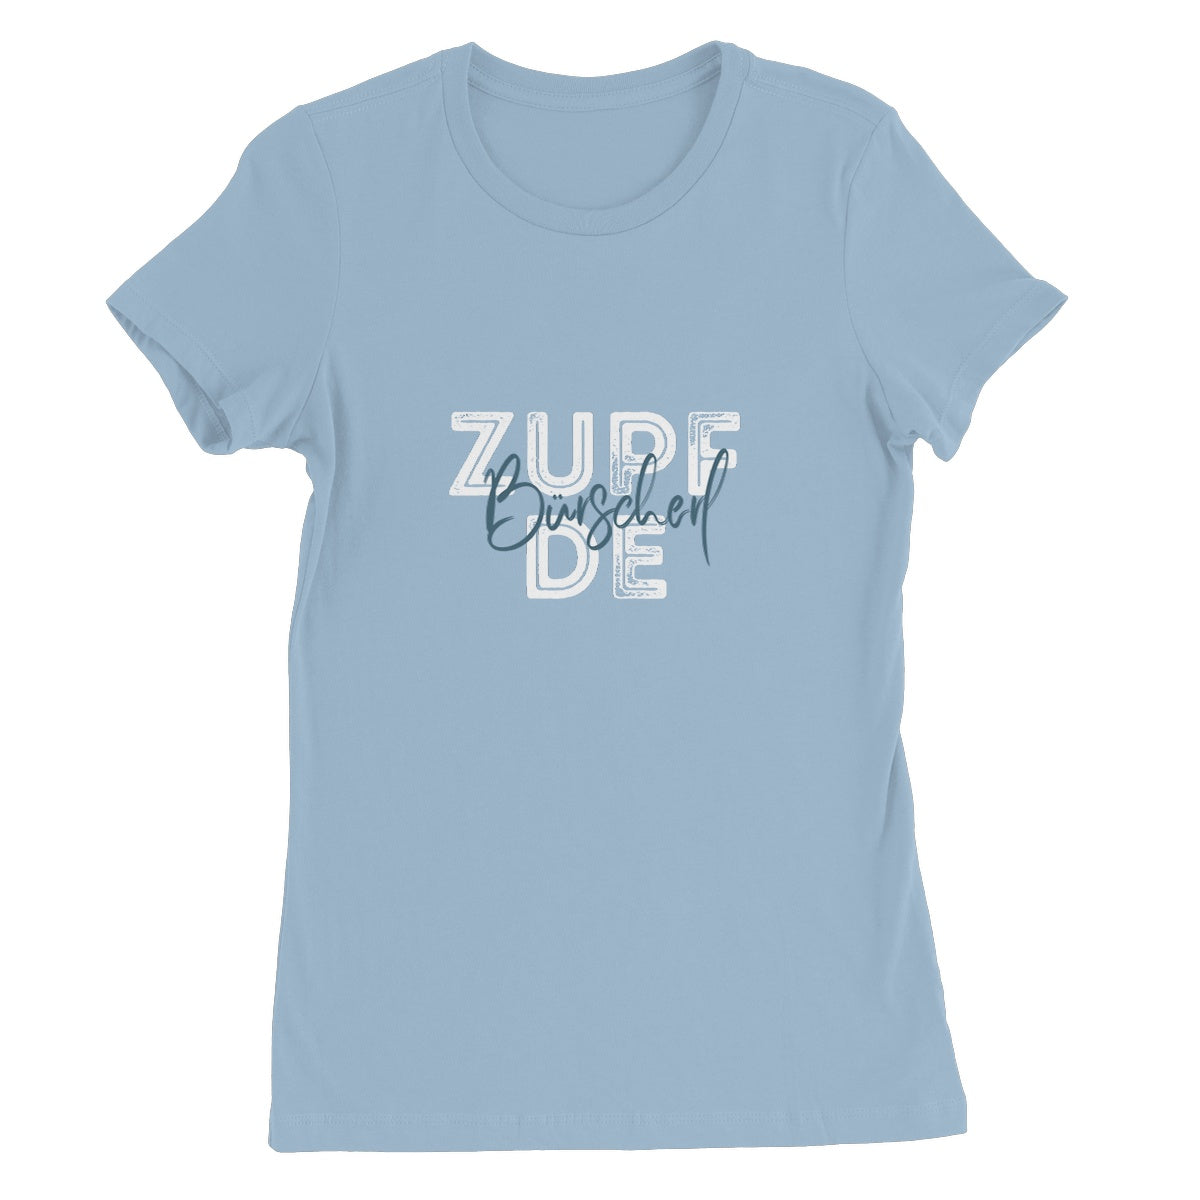 Women's Bavarian Graphic T-Shirt "Zupf de, Burscherl" script print - 4 colours - Bavari Shop - Bavarian Outfits, Dirndl, Lederhosen & Accessories